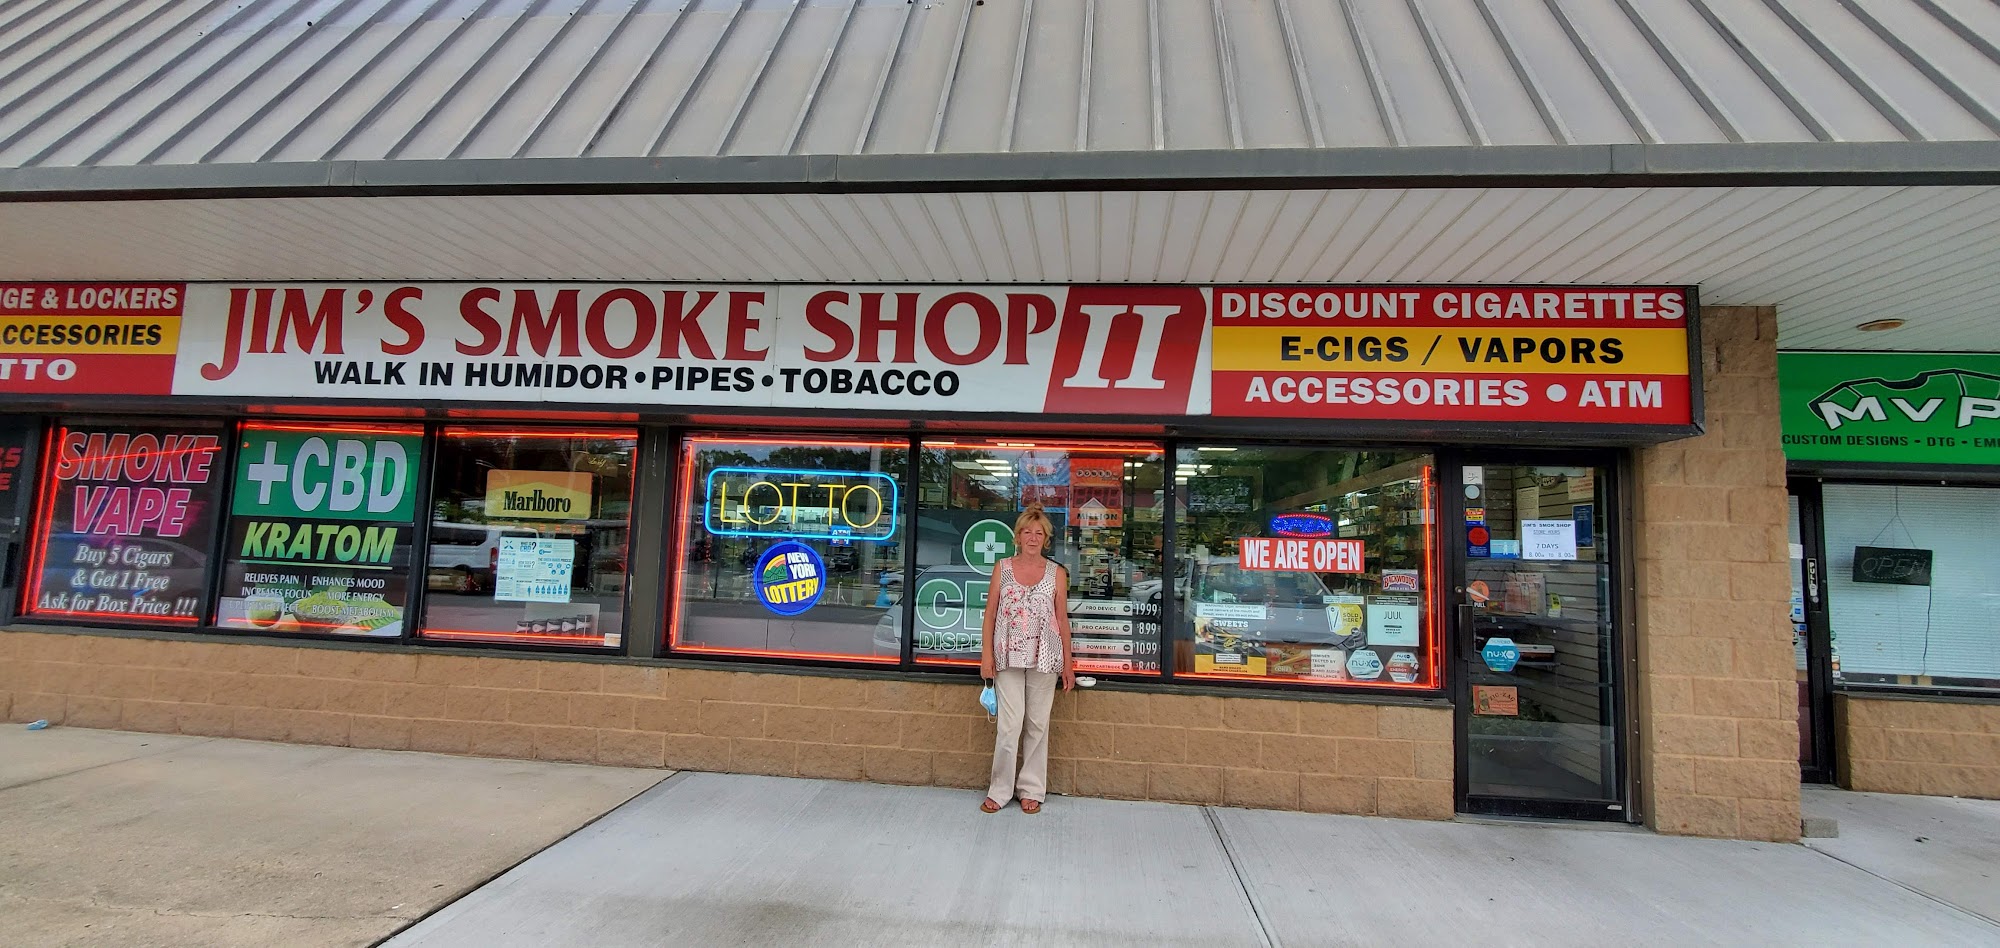 Jim's Smoke Shop II